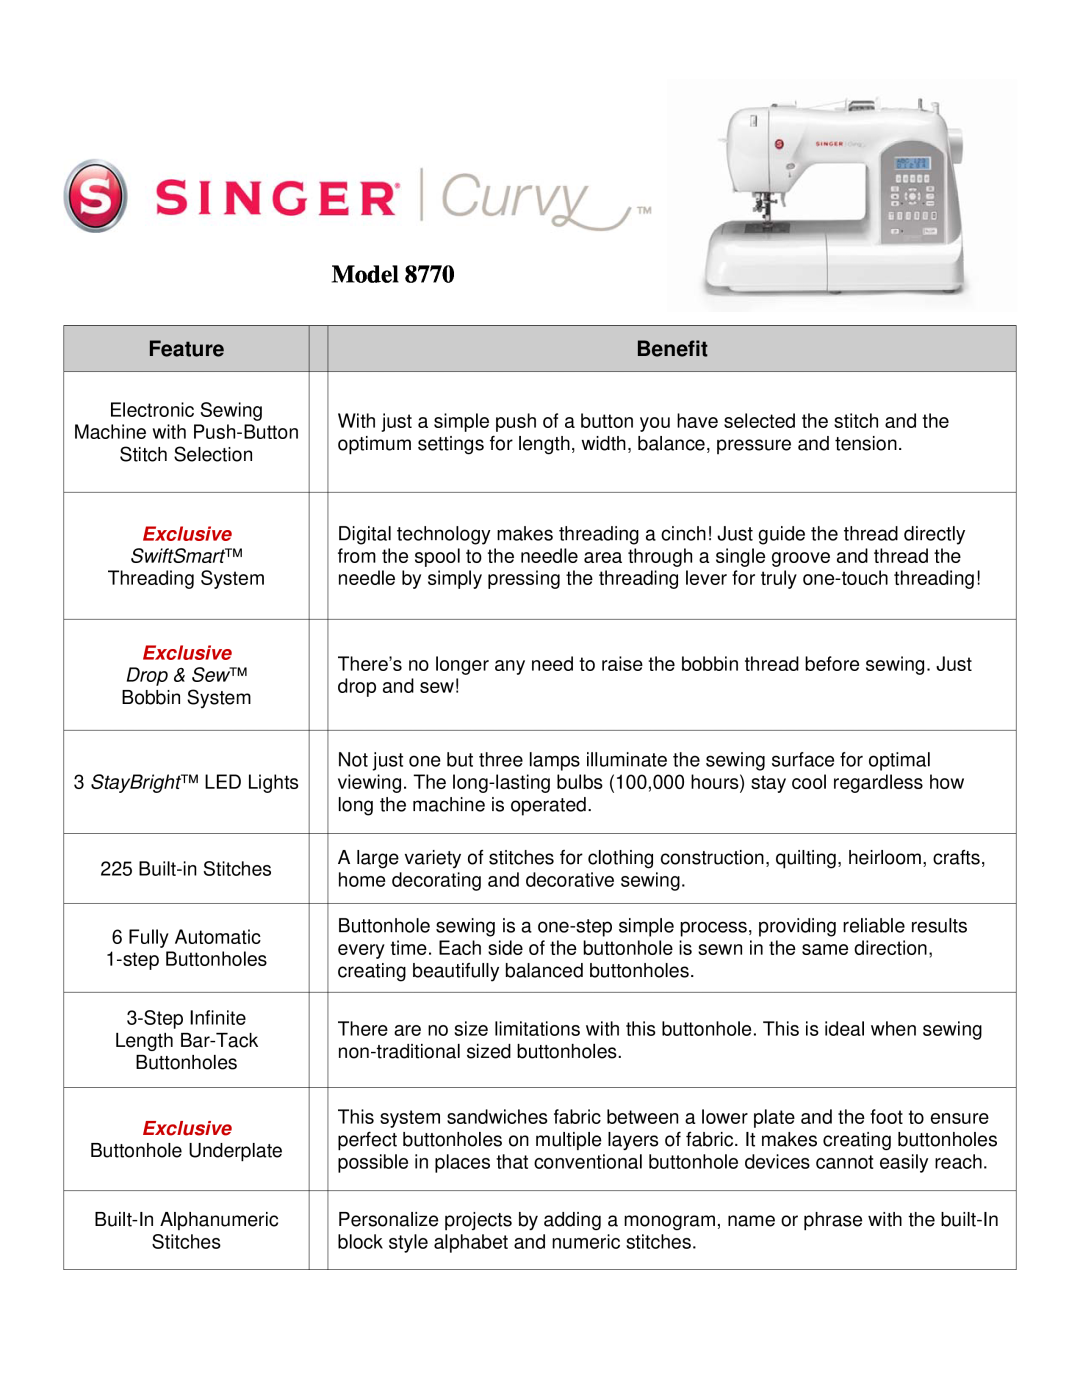 Singer 8770 manual Feature, Benefit, Model, Exclusive, SwiftSmart, Drop & Sew 